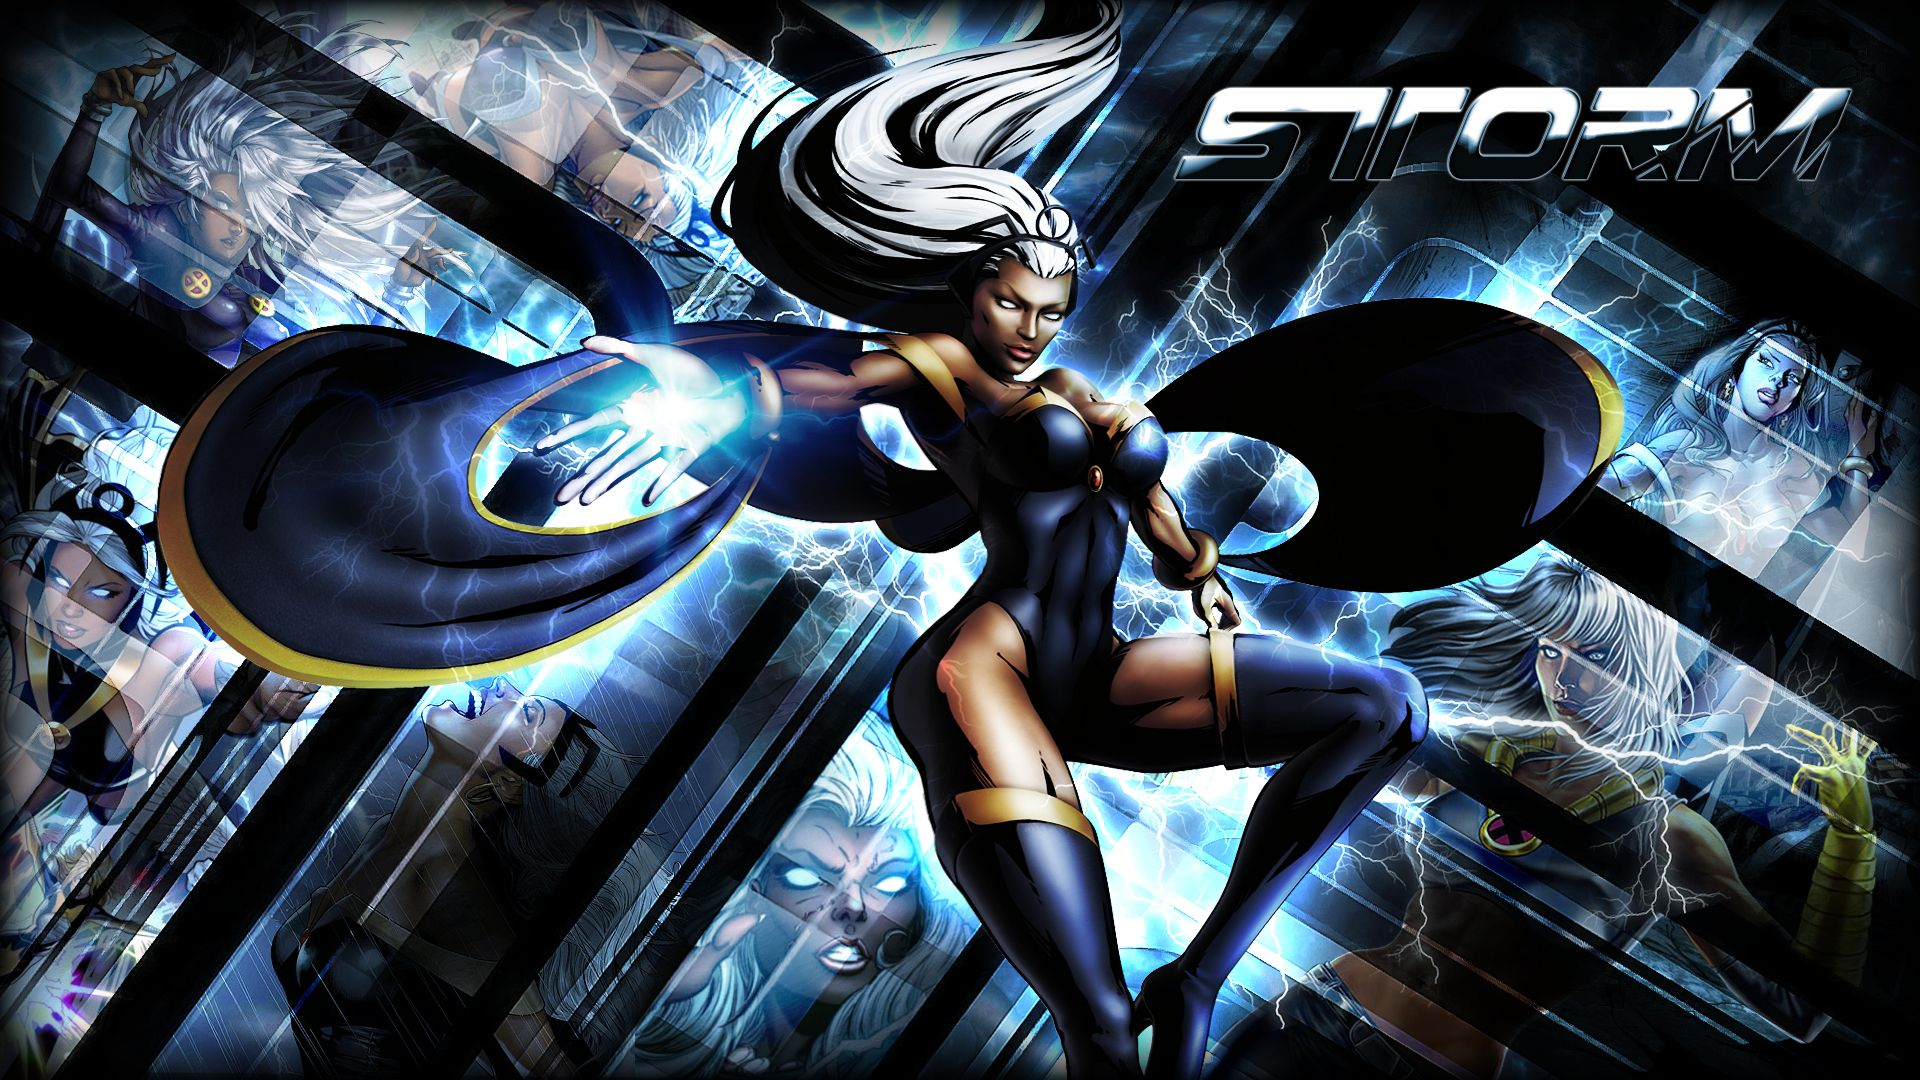 1920x1080 Storm from X-Men. | Female superhero, X men, Storm wallpaper